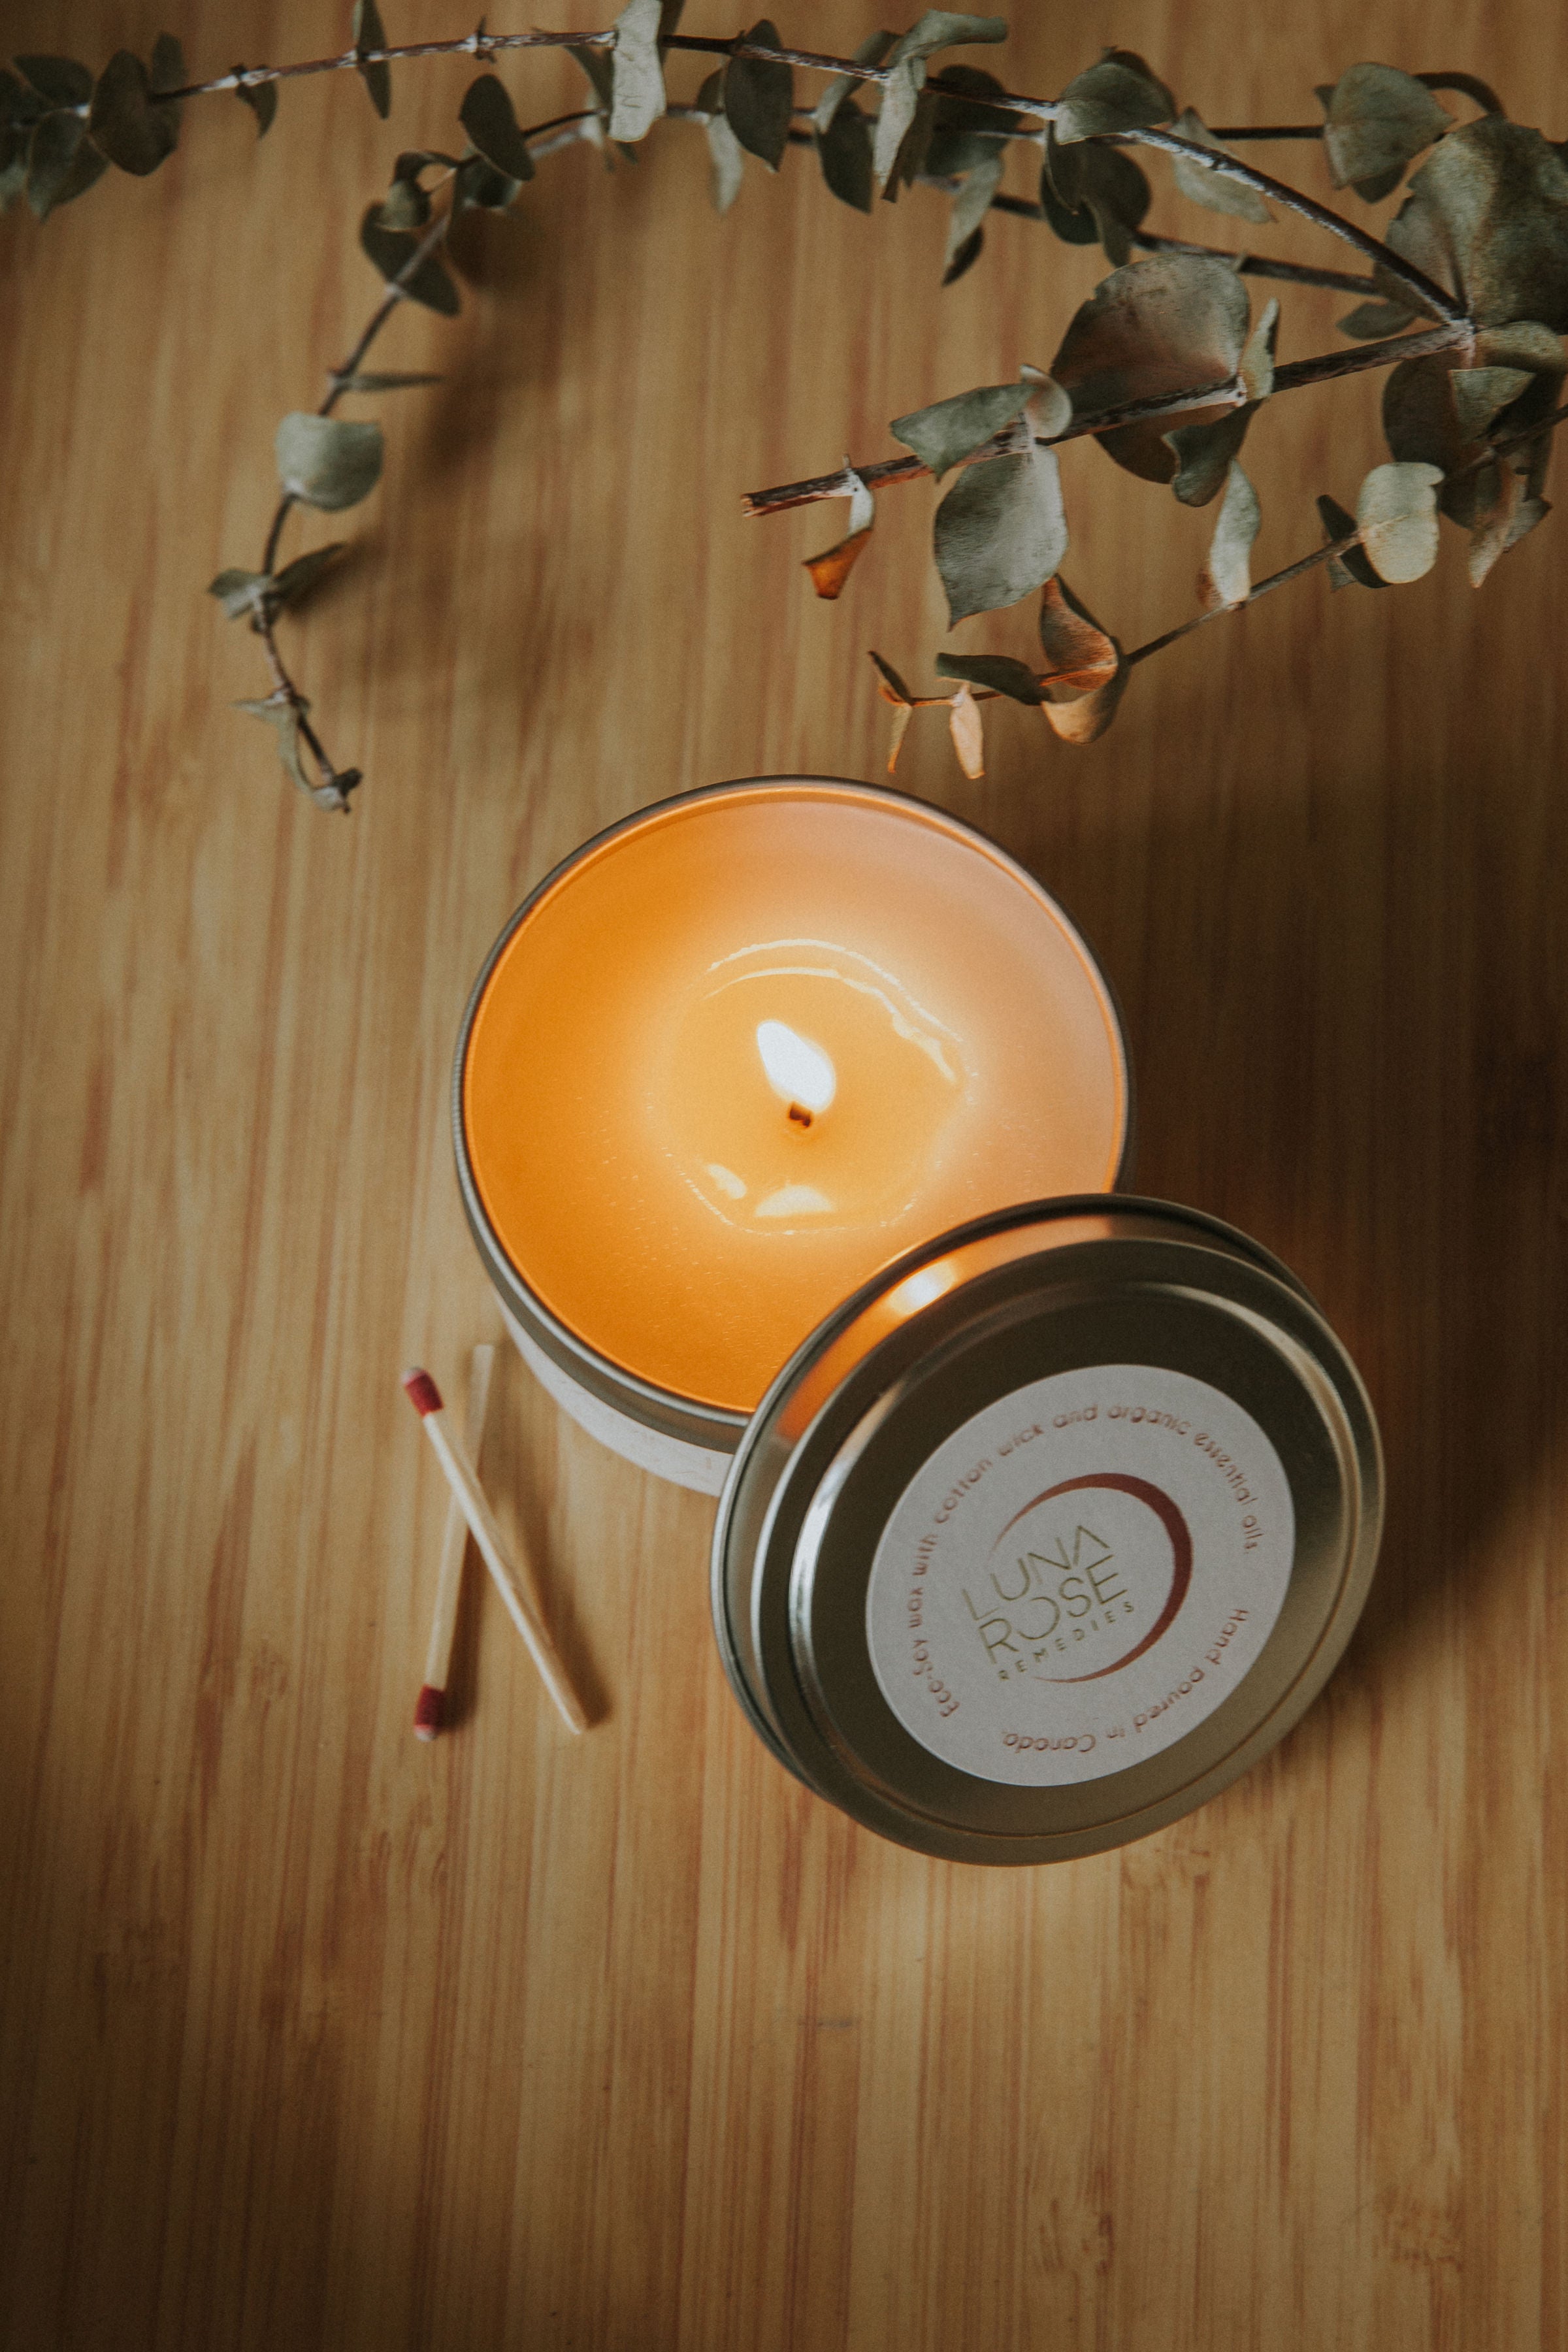 Balsam Fir, Pine & Cedarwood Essential Oil Candle - Luna Rose Remedies